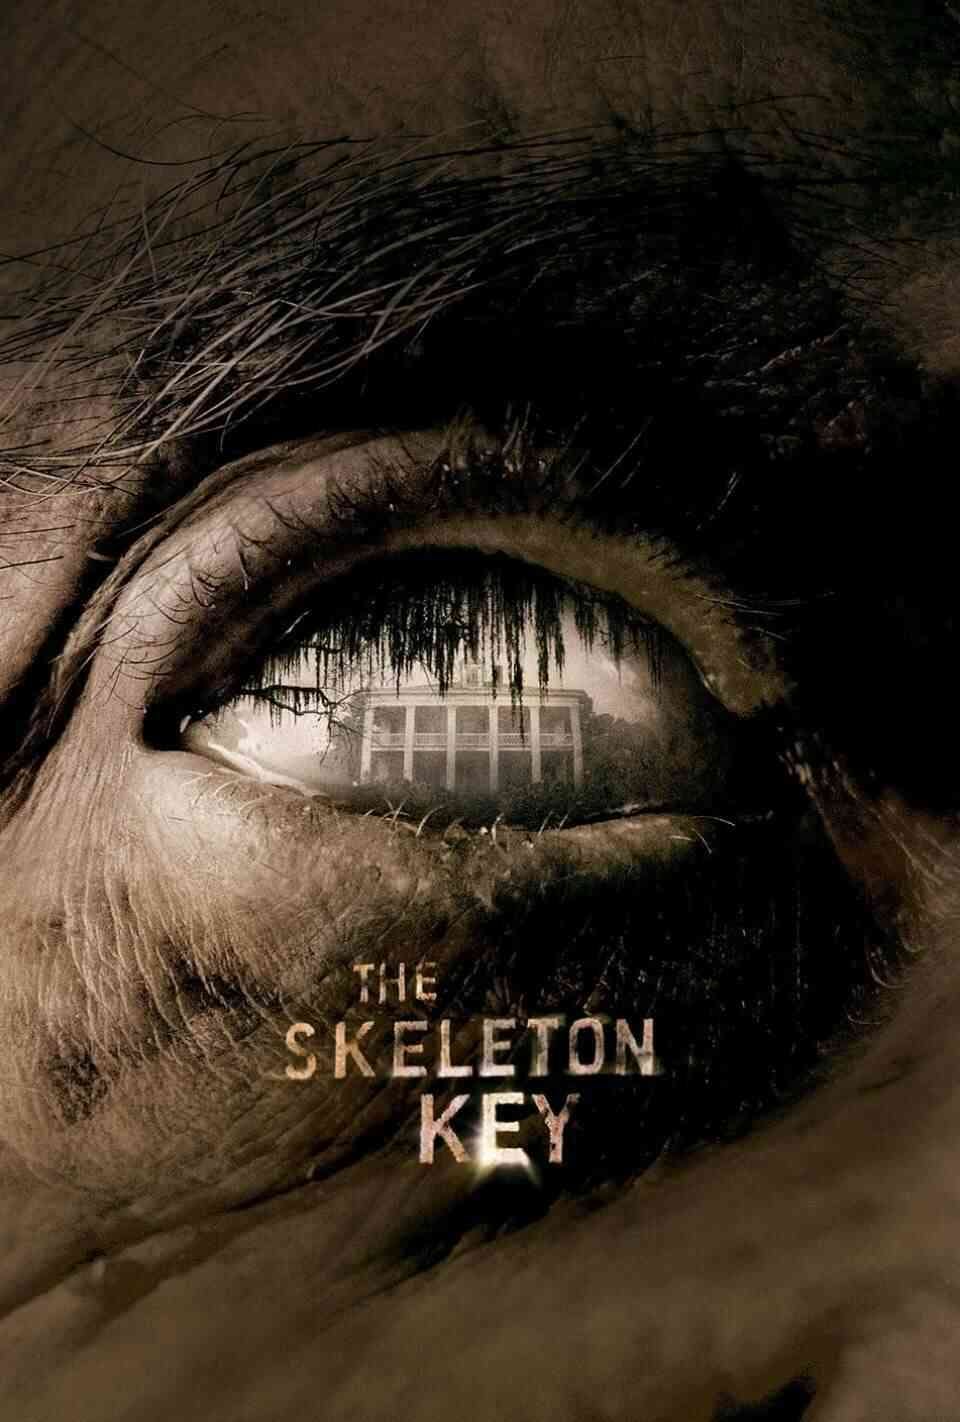 Read The Skeleton Key screenplay (poster)